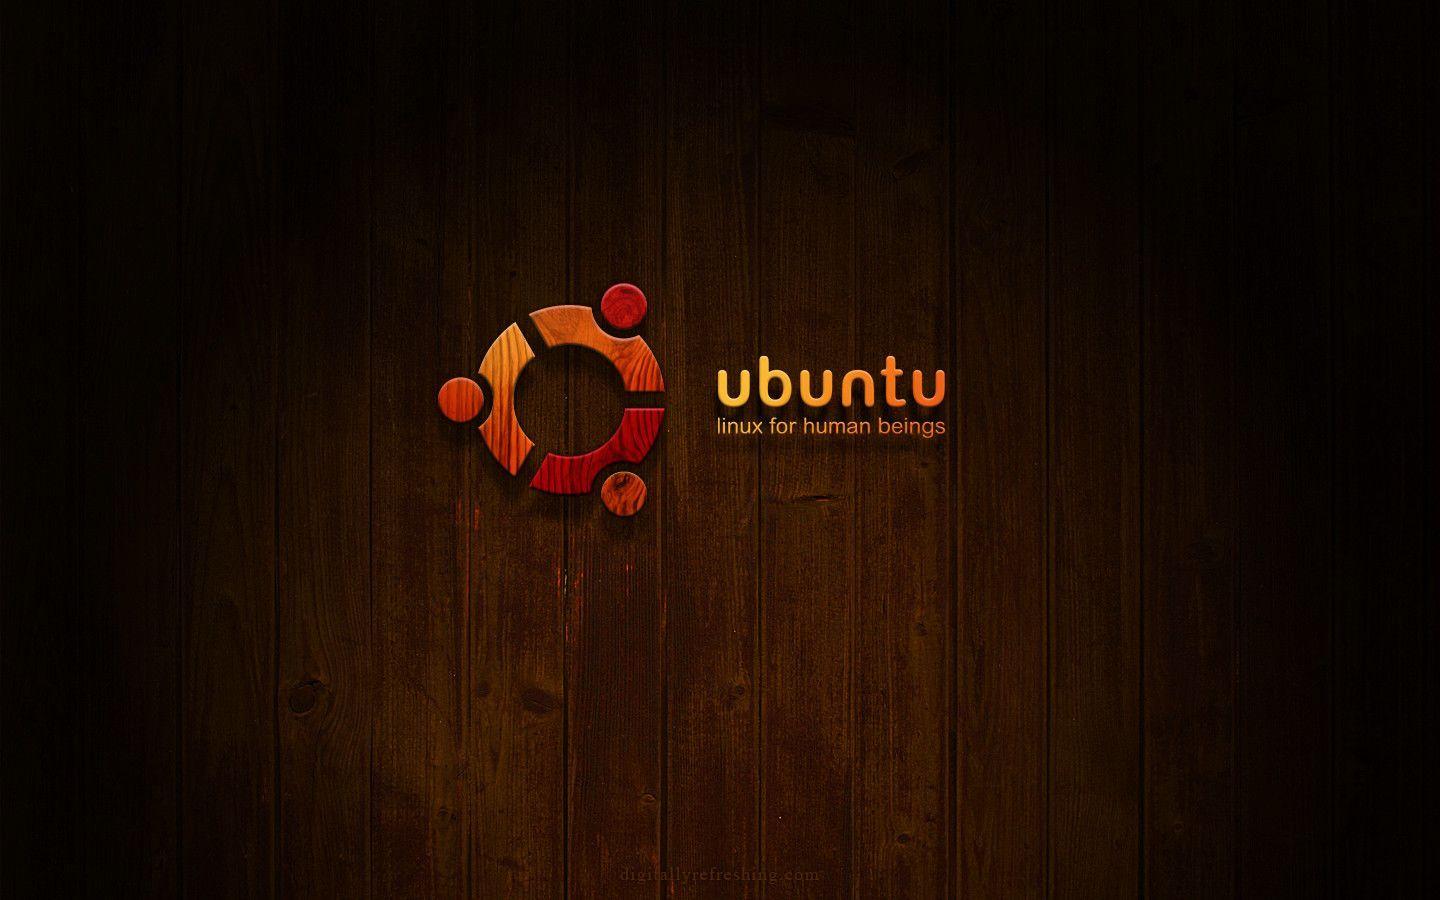 Linux image Ubuntu Wallpaper HD wallpaper and background photo